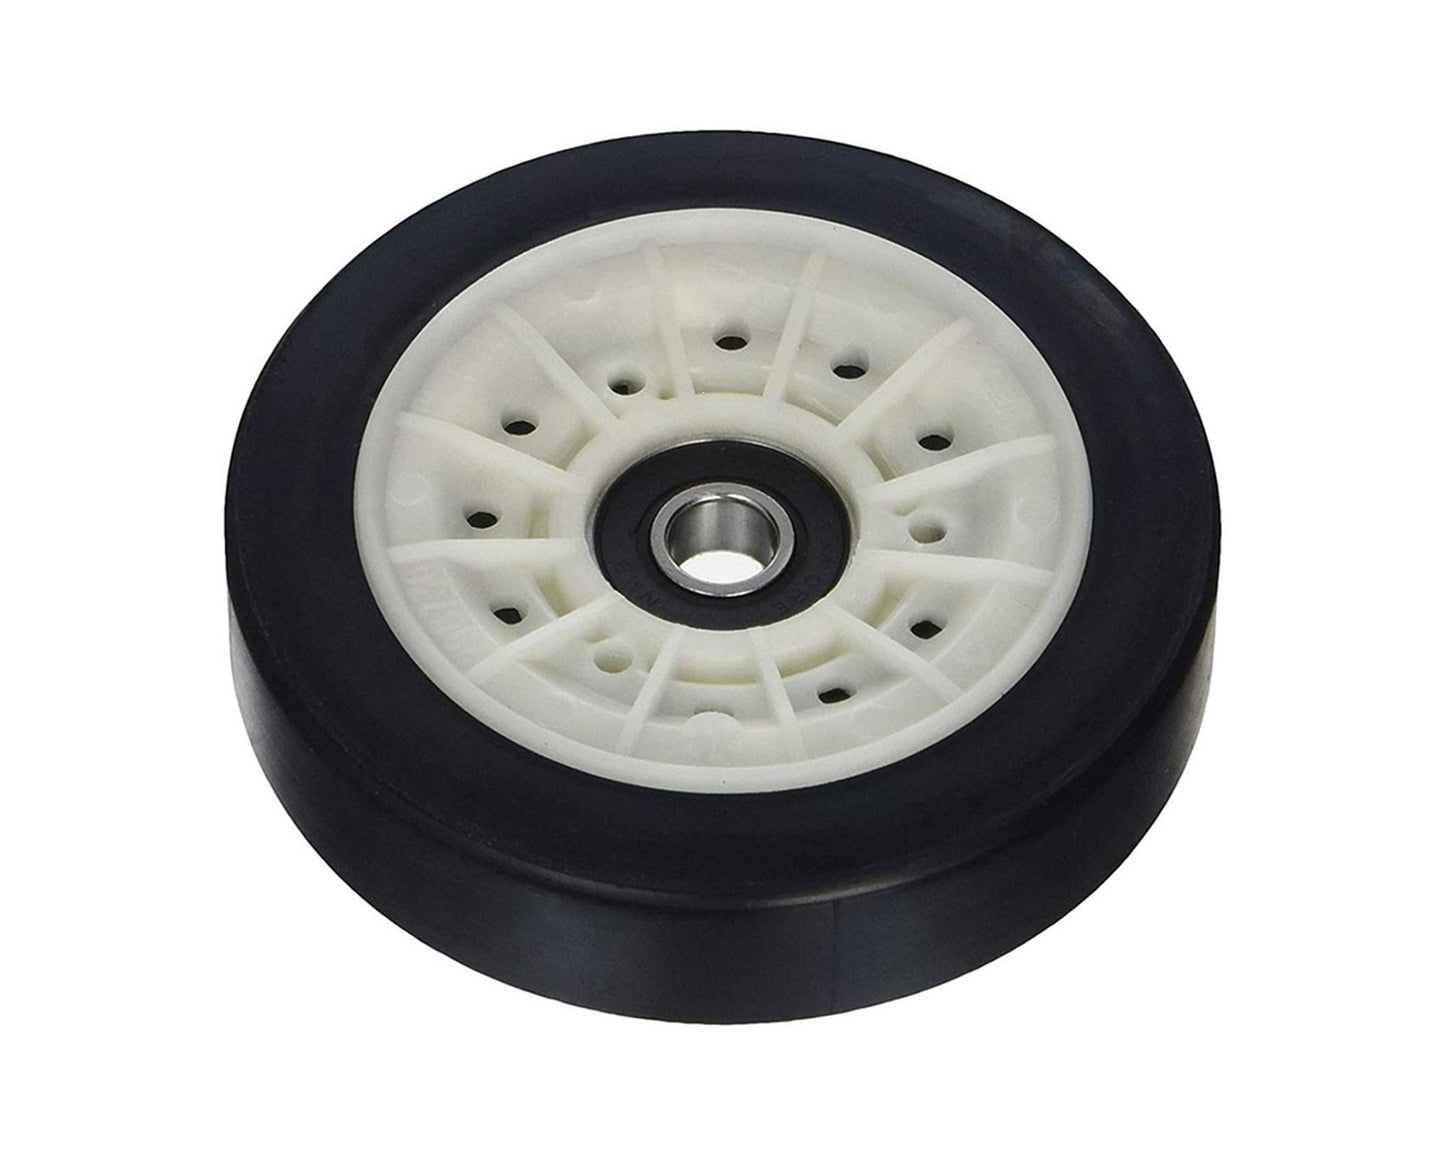 Tumble Dryer Drum Wheel Roller for Beko DCU8230, DCU9330R, DCU9330W, DCU9330X, DPU8360W, DSC64S, DSC64W, DSC85W